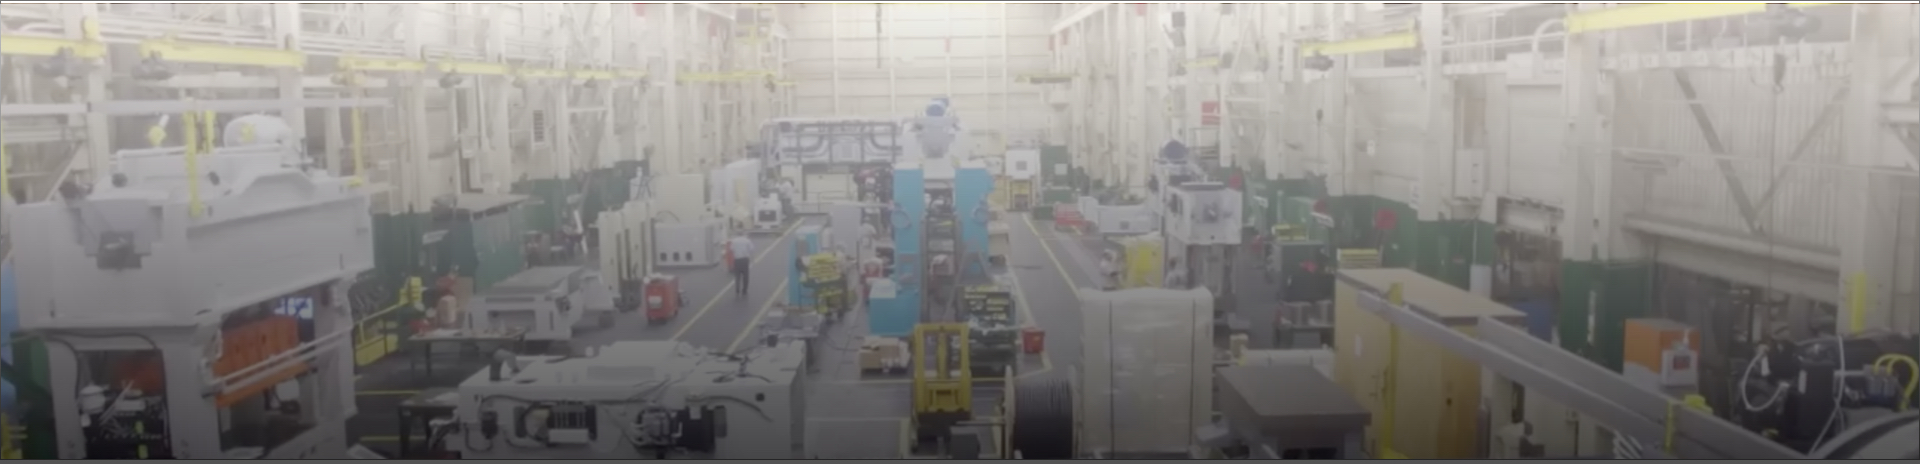 Nidec Press Automation Warehouse